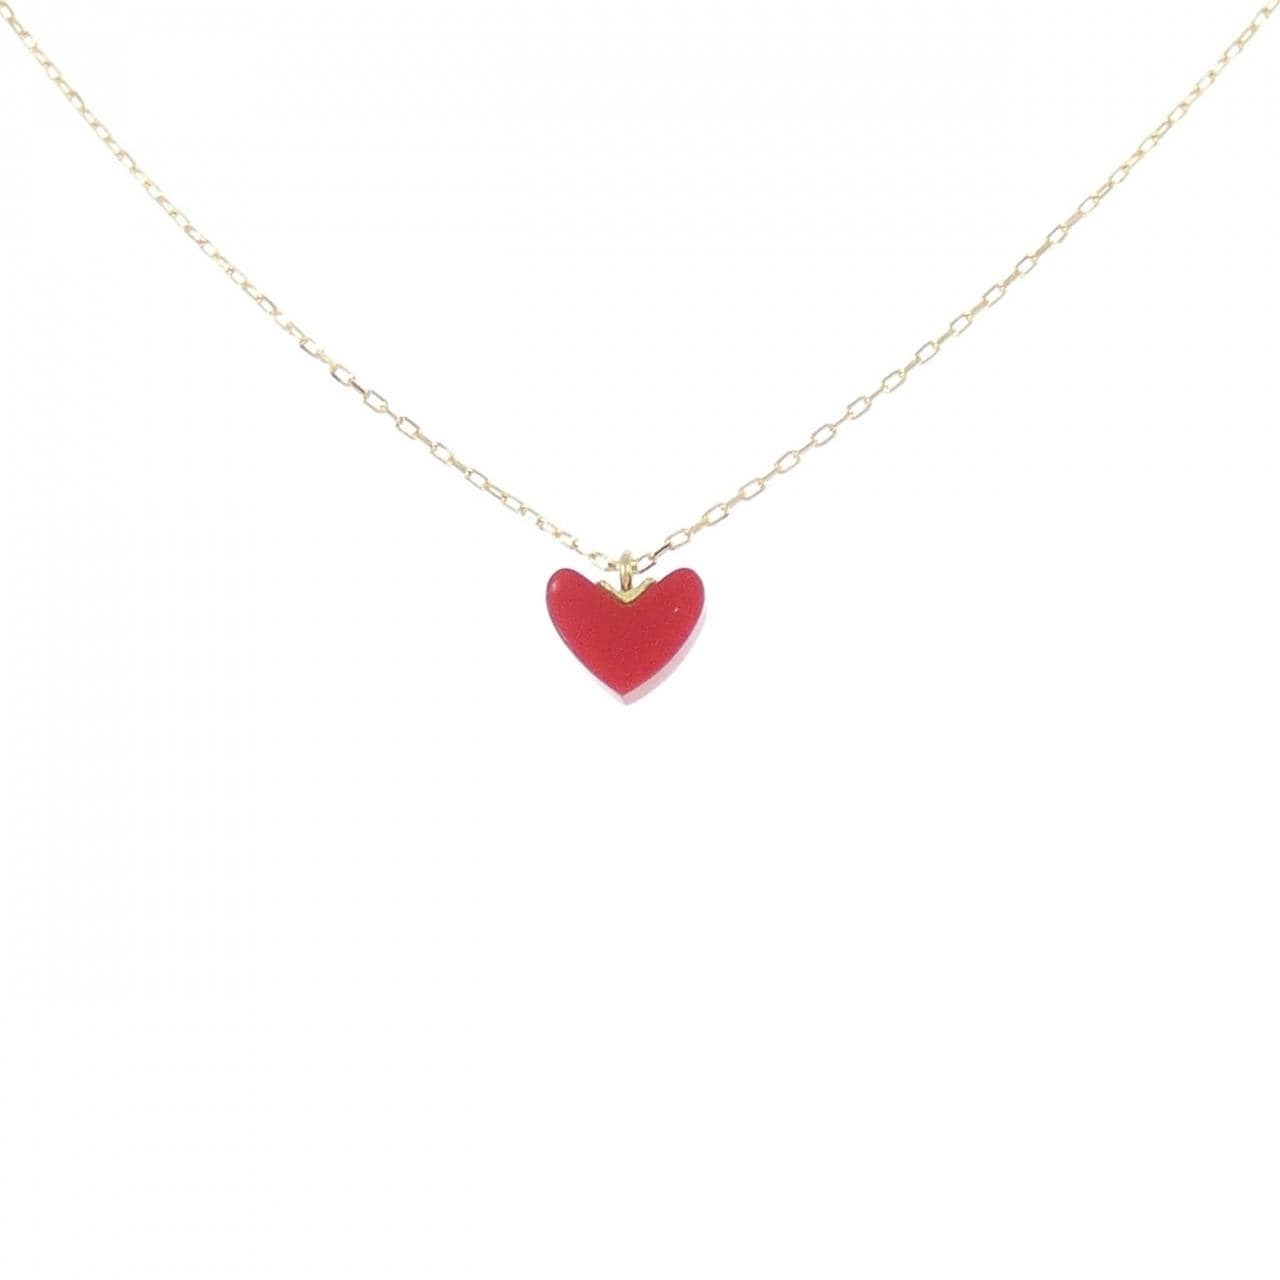 AHKAH heart necklace